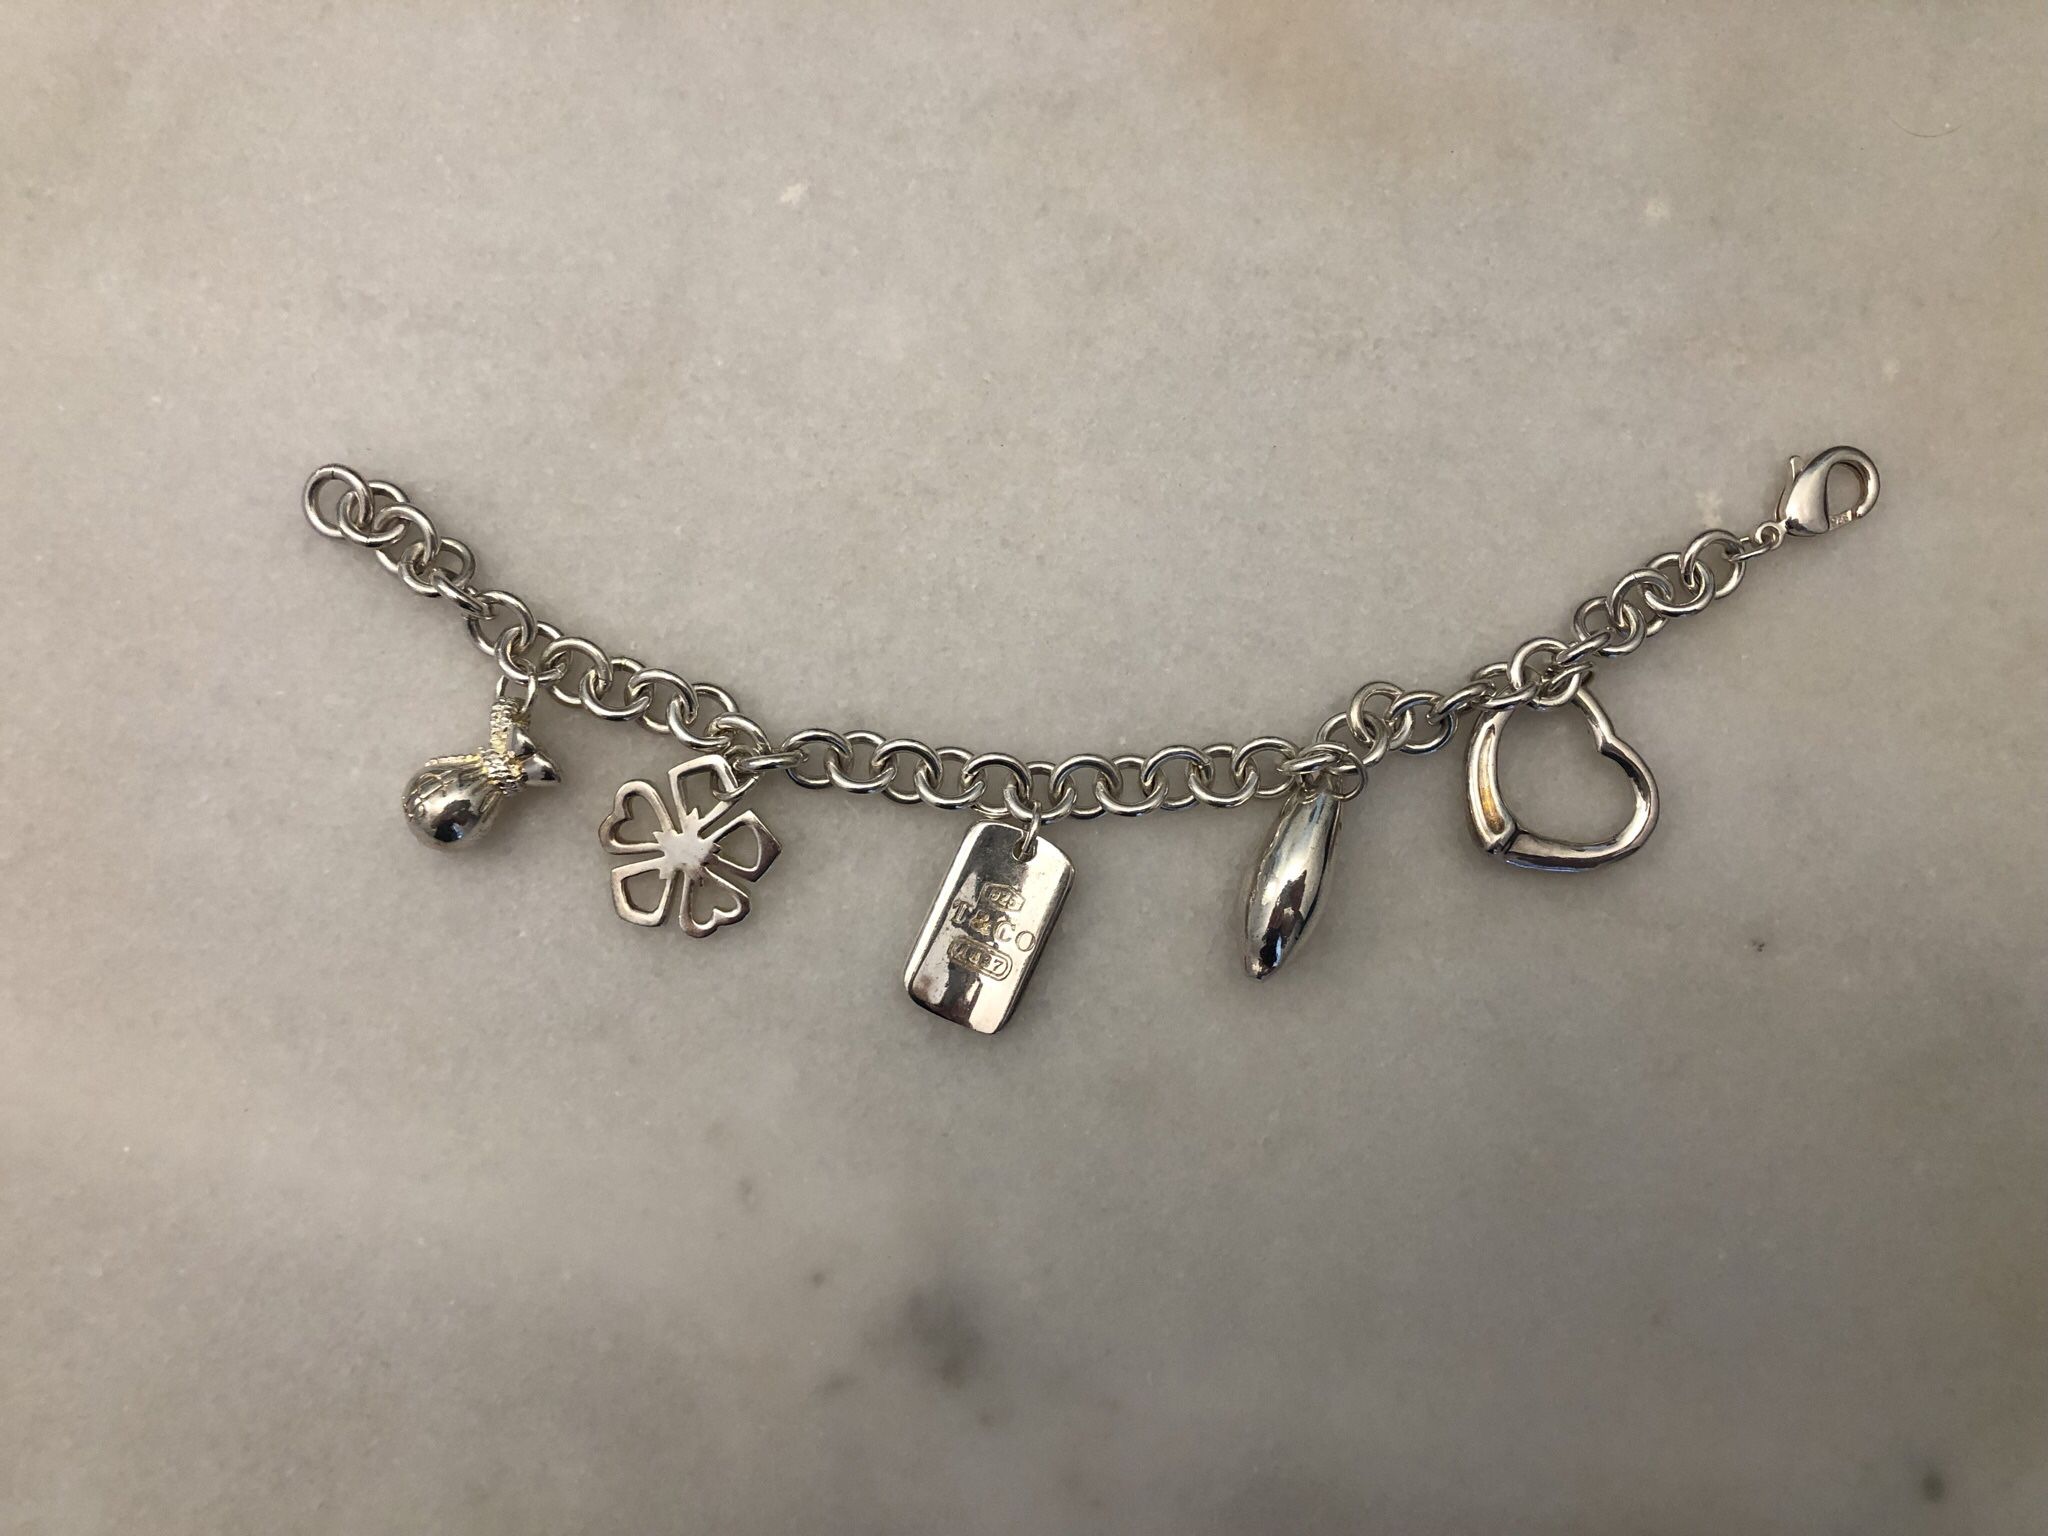 Tiffany’s bracelet dupe 